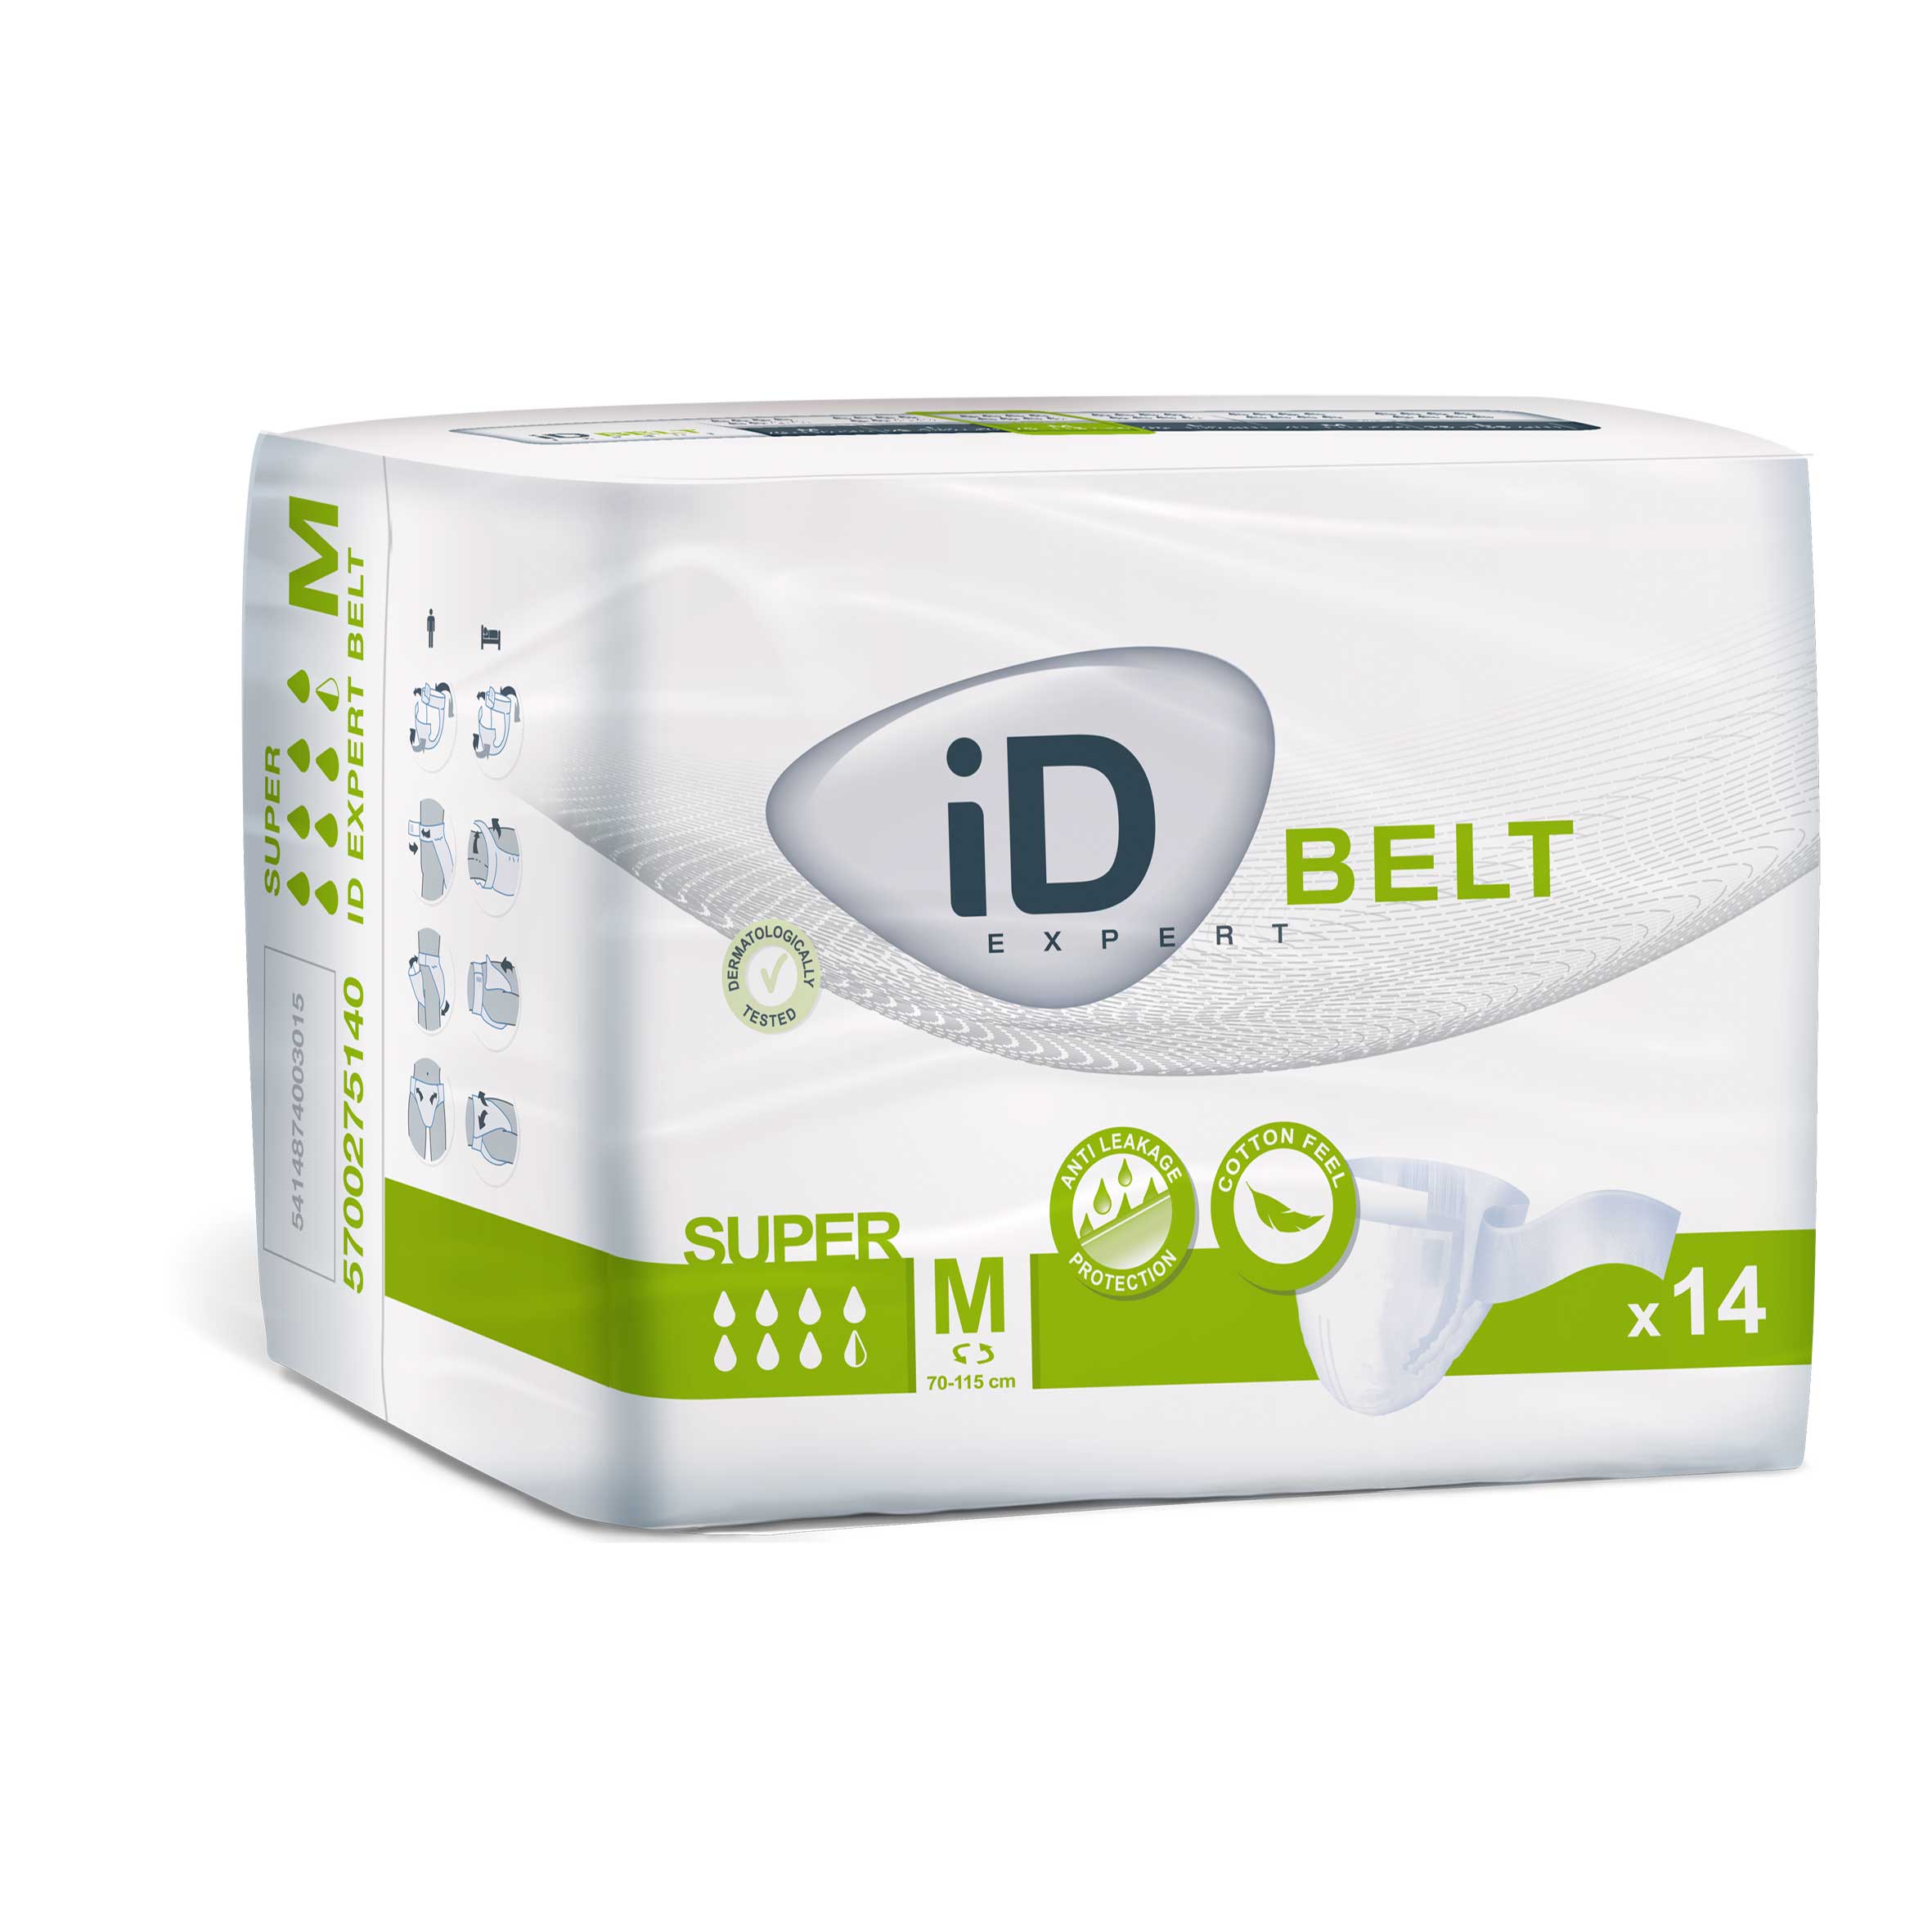 iD Expert Belt - Medium Super